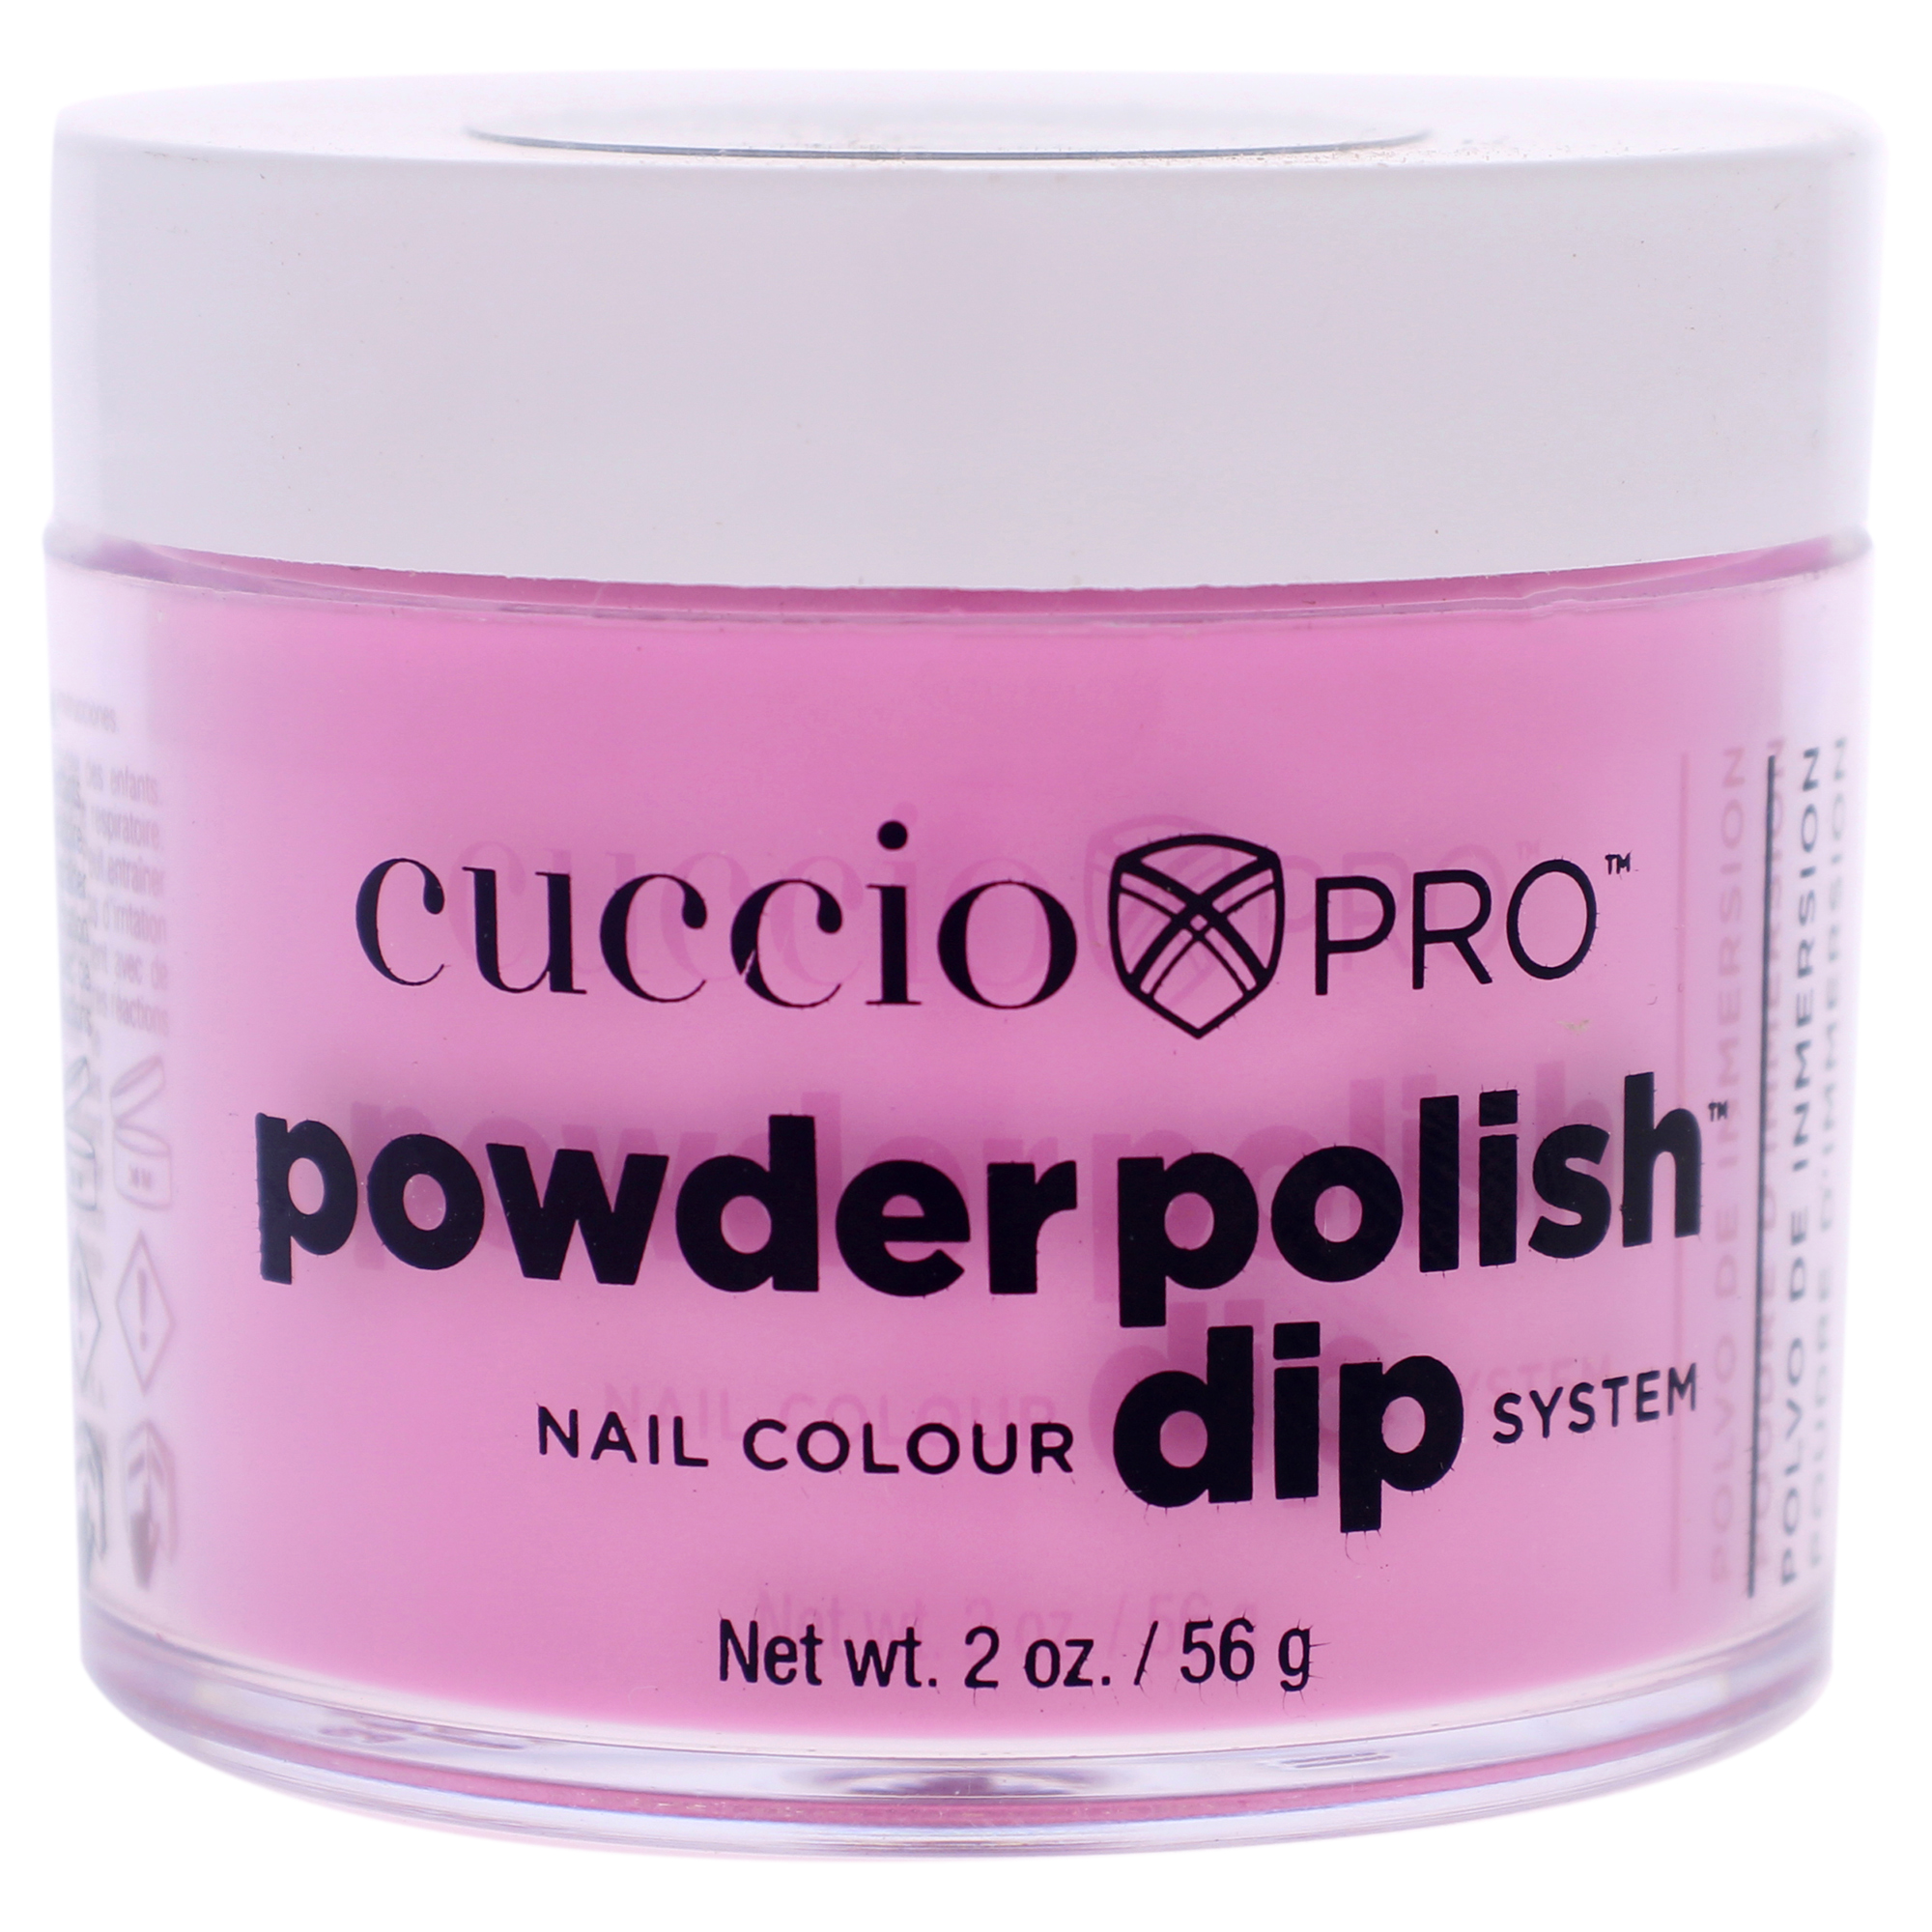 Cuccio Pro Powder Polish Nail Colour Dip System - Bubble Gum Pink, 1.6 ...